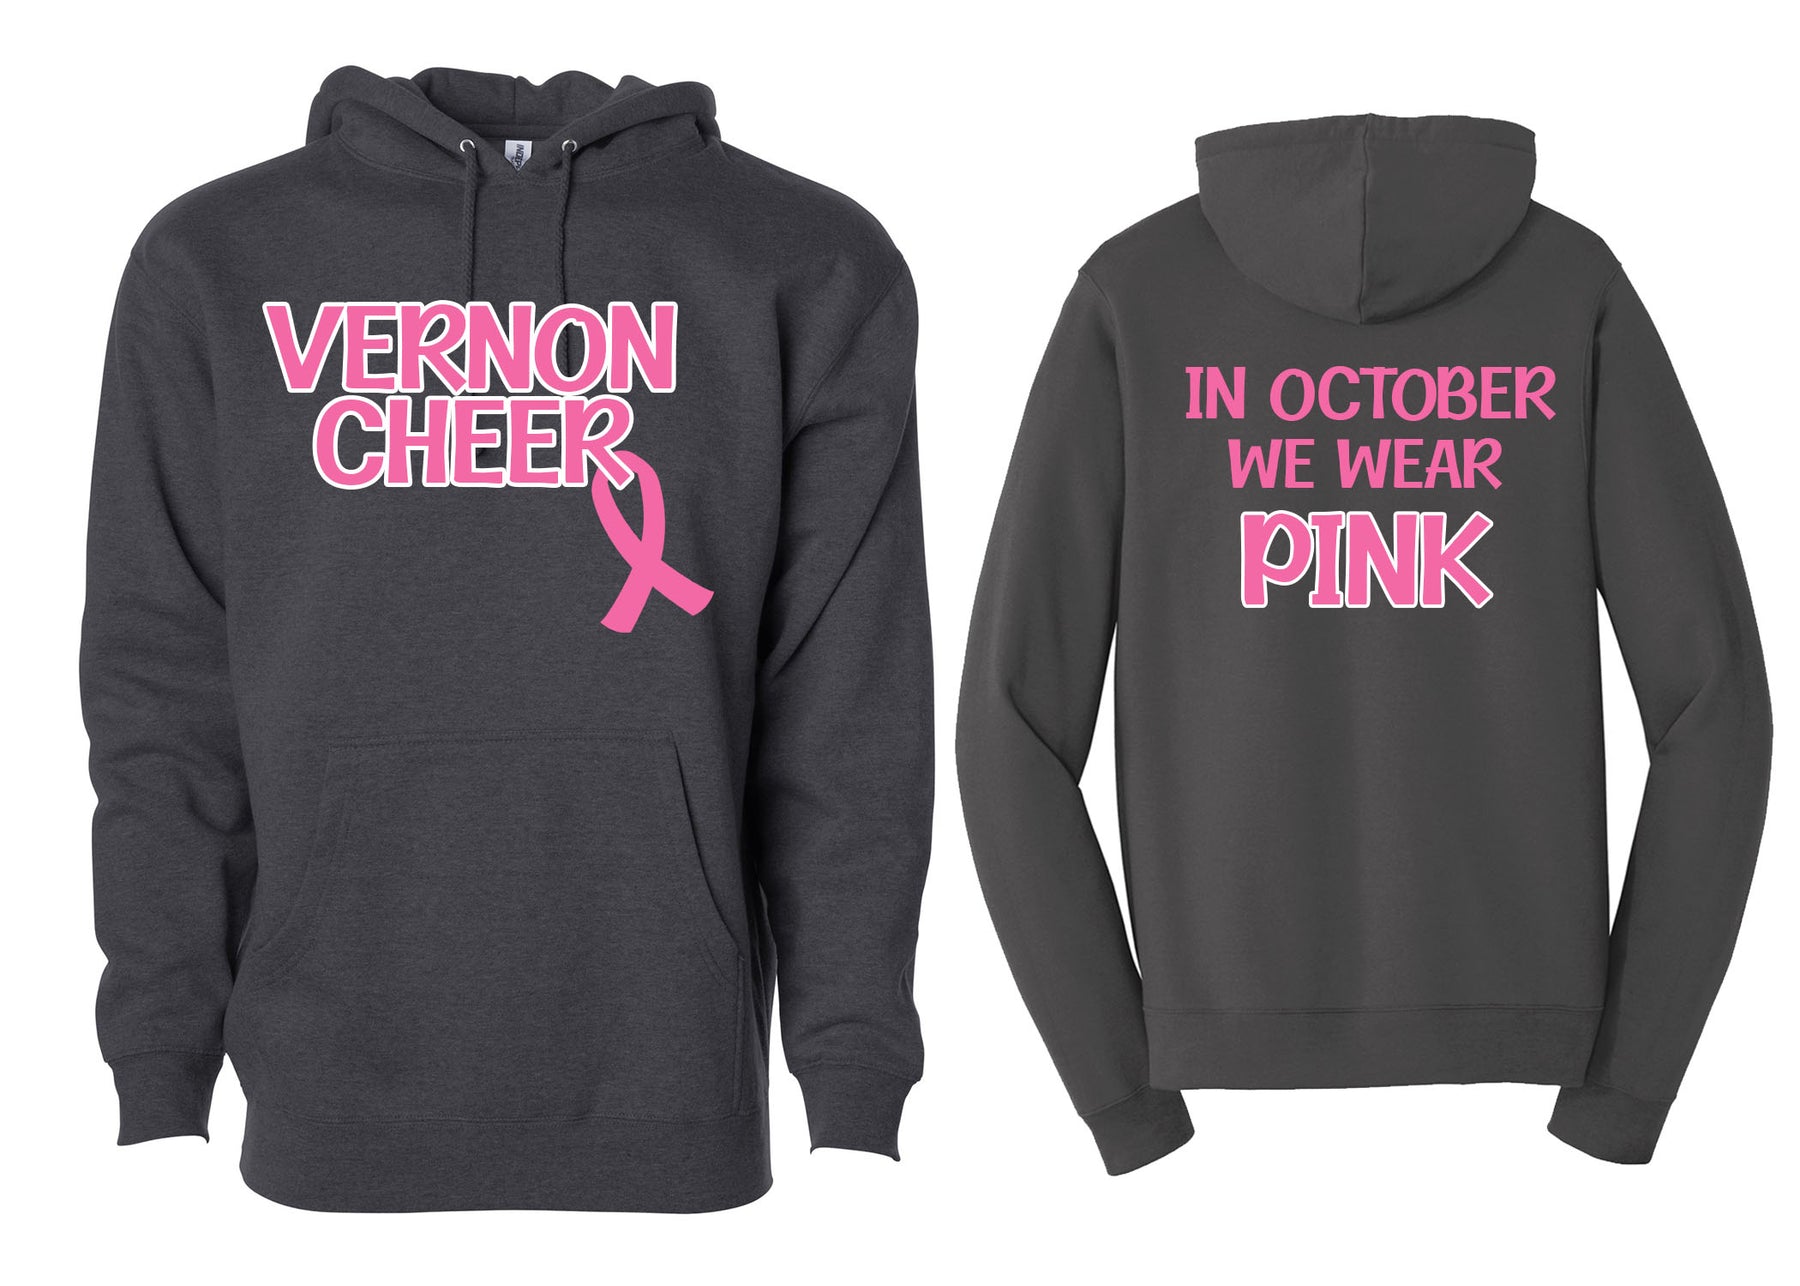 In October we wear pink hooded sweatshirt